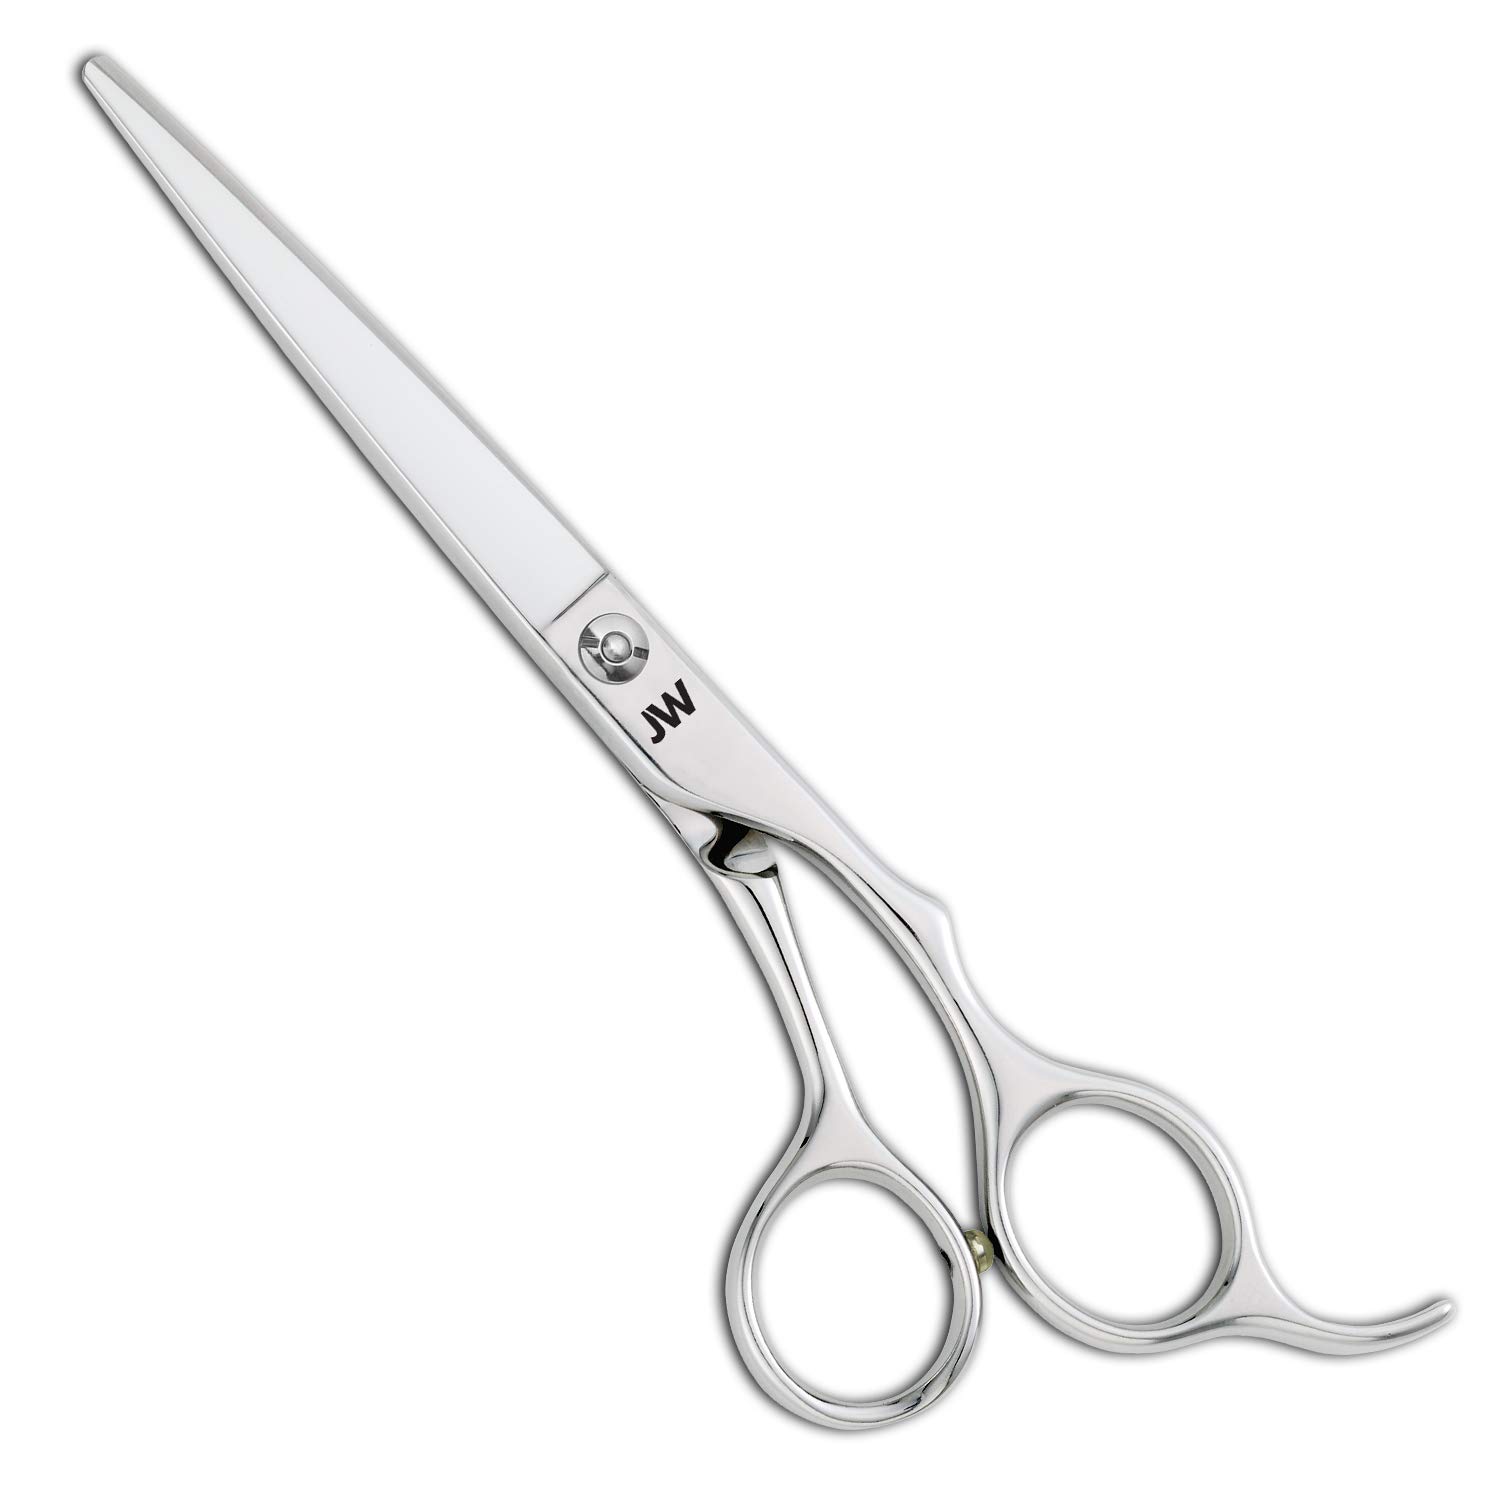 JW CRX Professional Hair Cutting Scissors & Thinning Shear Set with Comb Set - Razor Edge Series